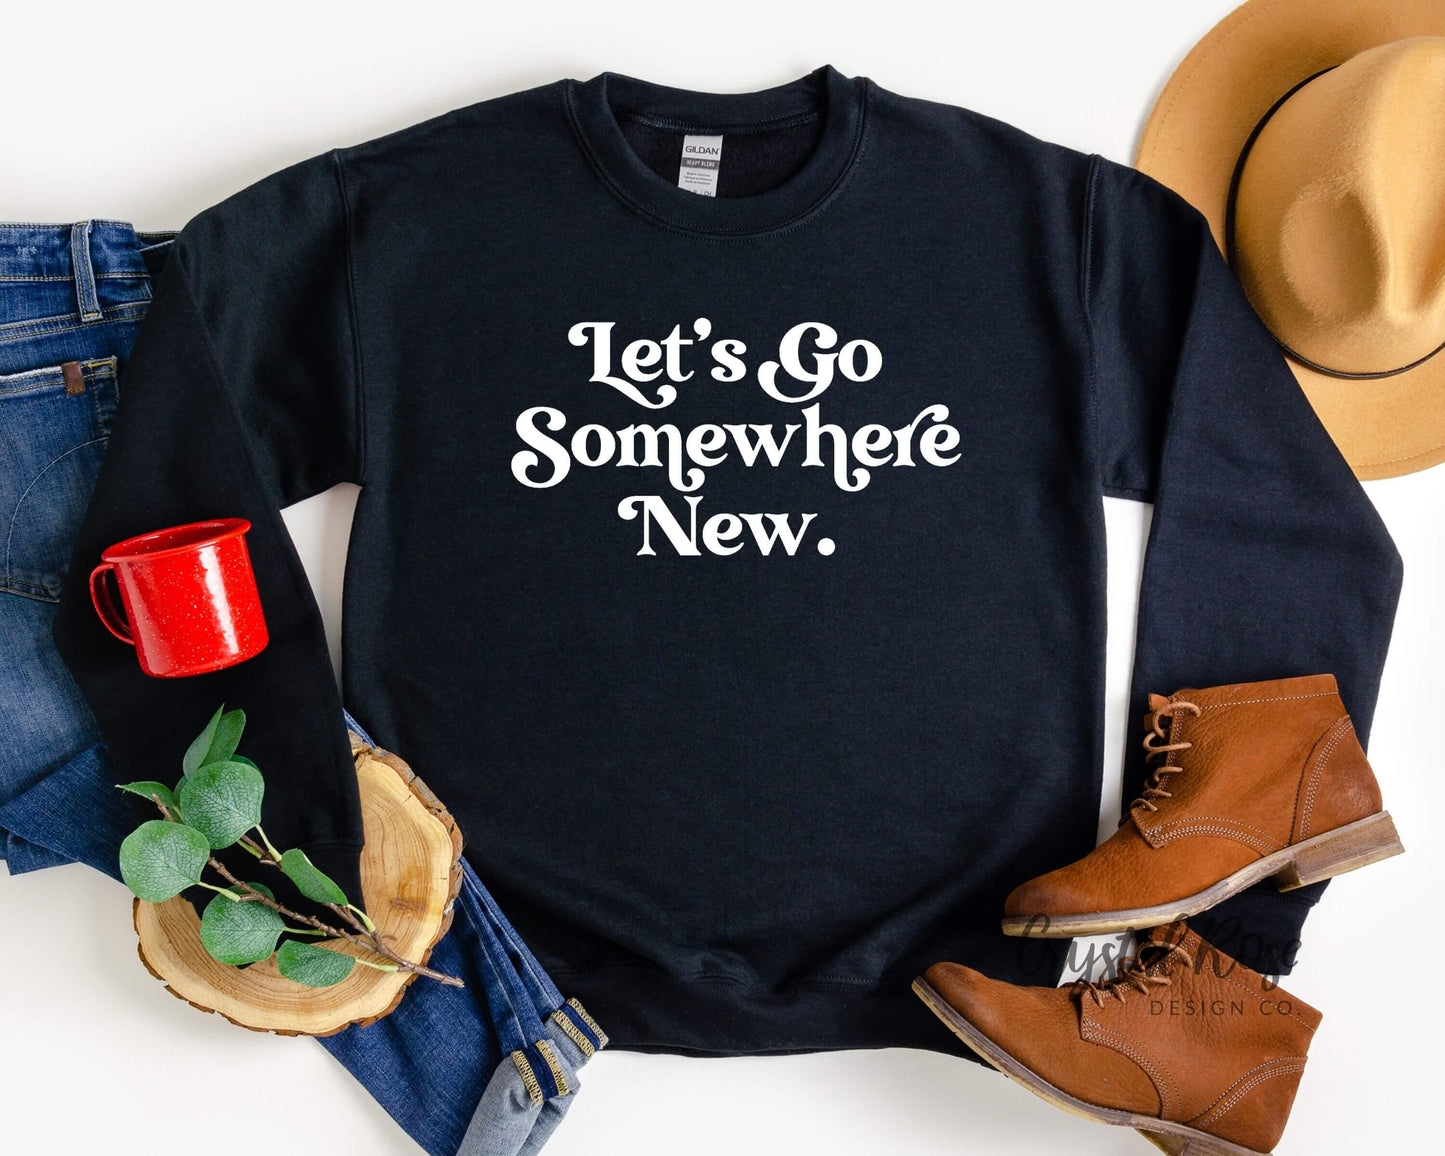 Let's Go Somewhere New Crewneck Sweatshirt - Crystal Rose Design Co.